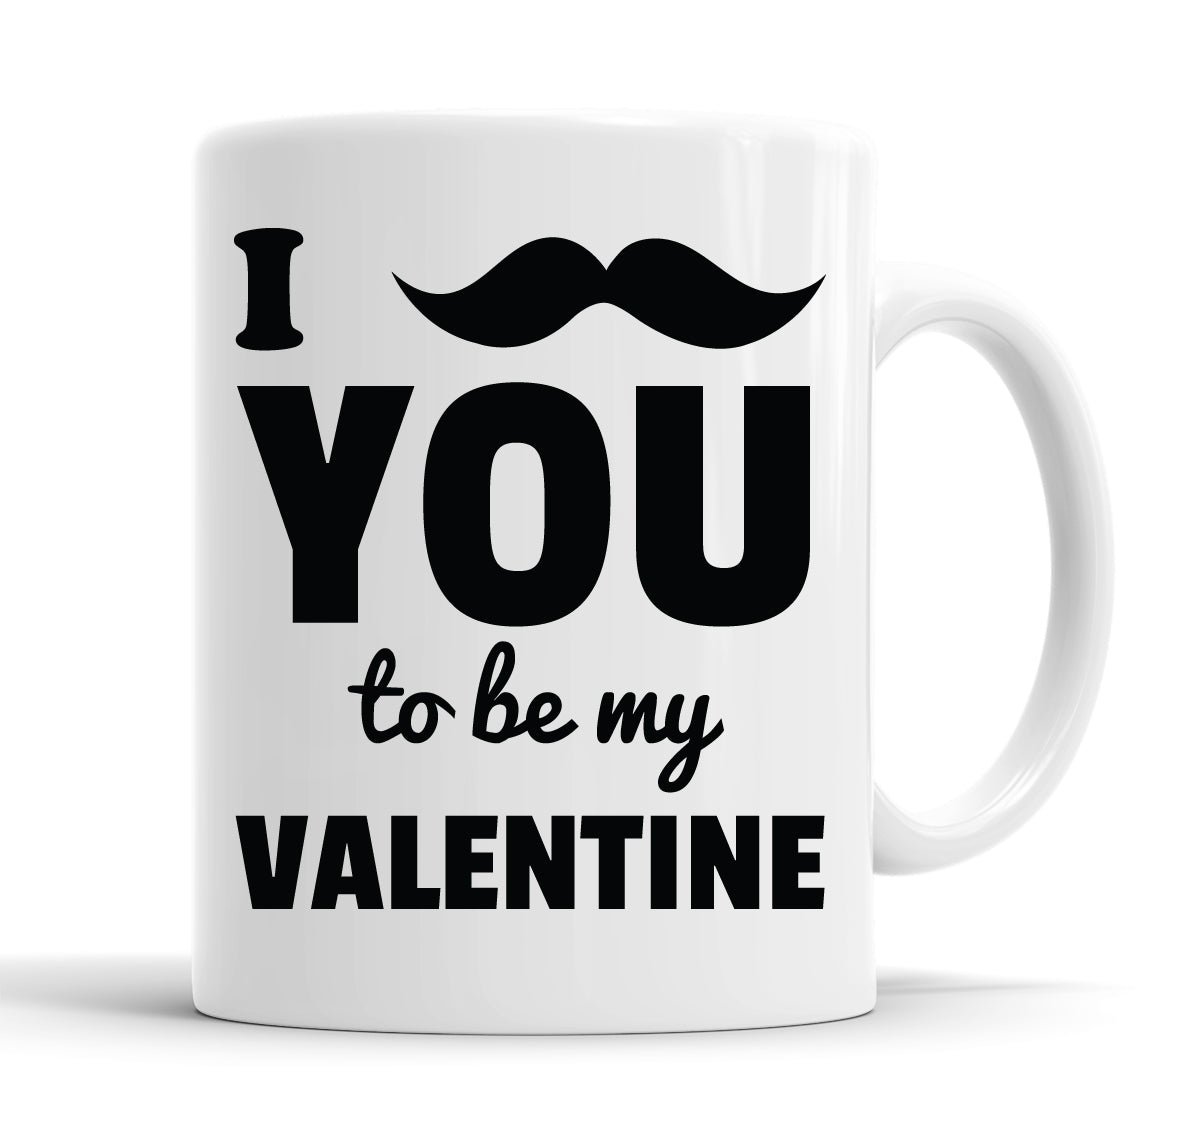 I Moustache You To Be My Valentine Funny Slogan Mug Tea Cup Coffee